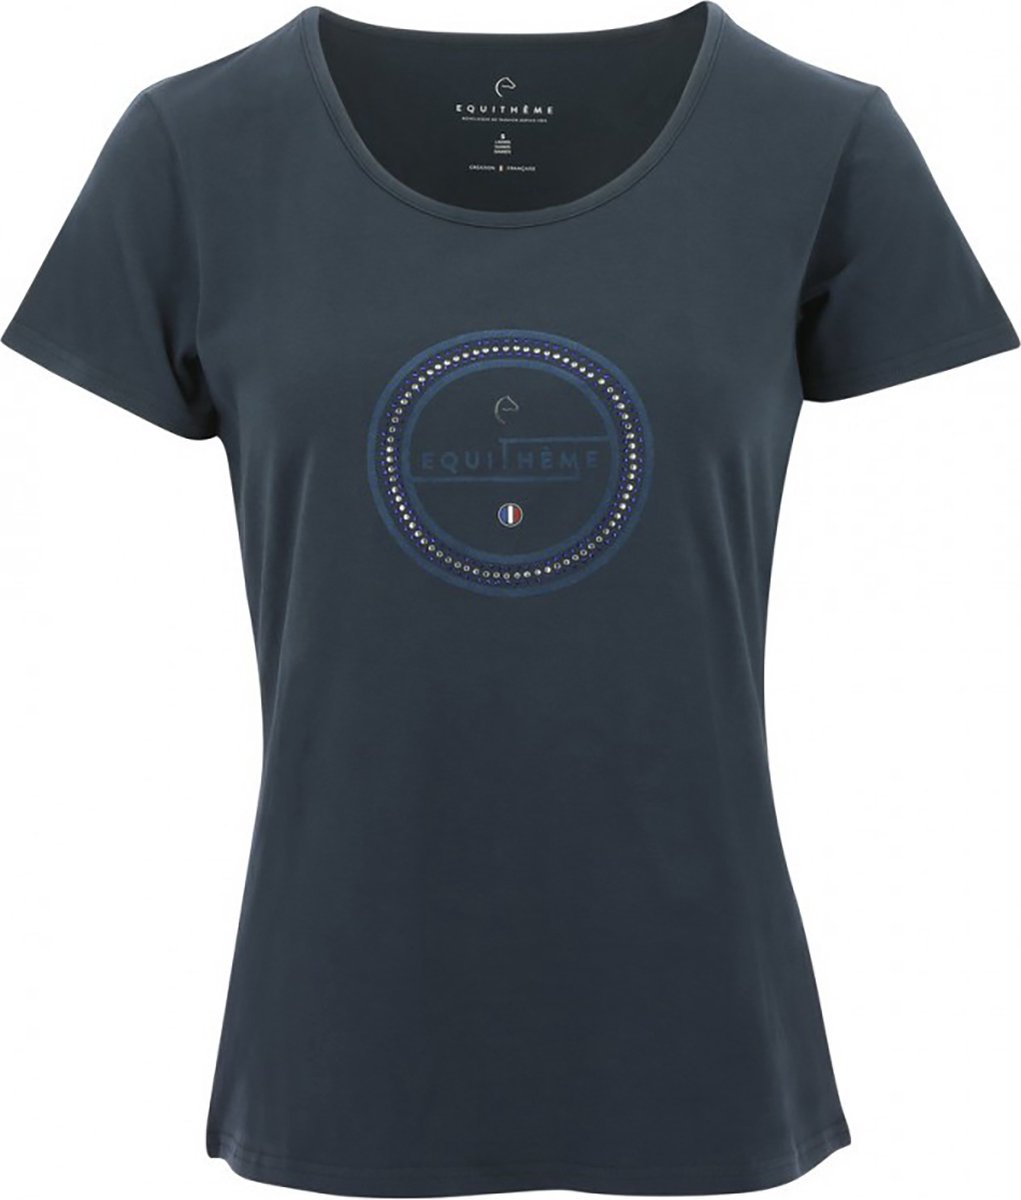 Equitheme T-shirt Anna - maat L - Navy